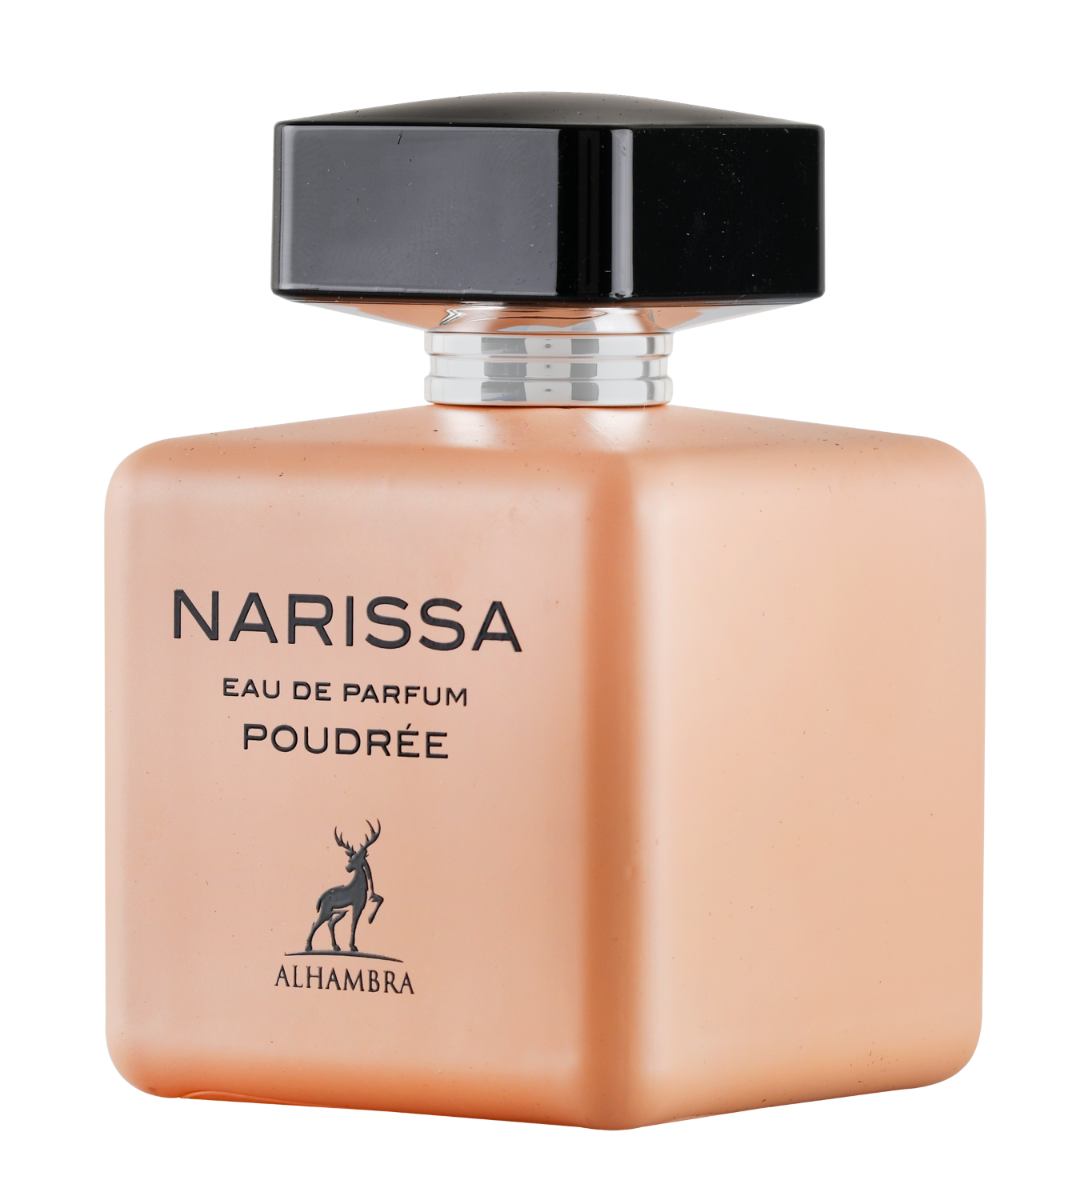 narissa_poudree_bottle